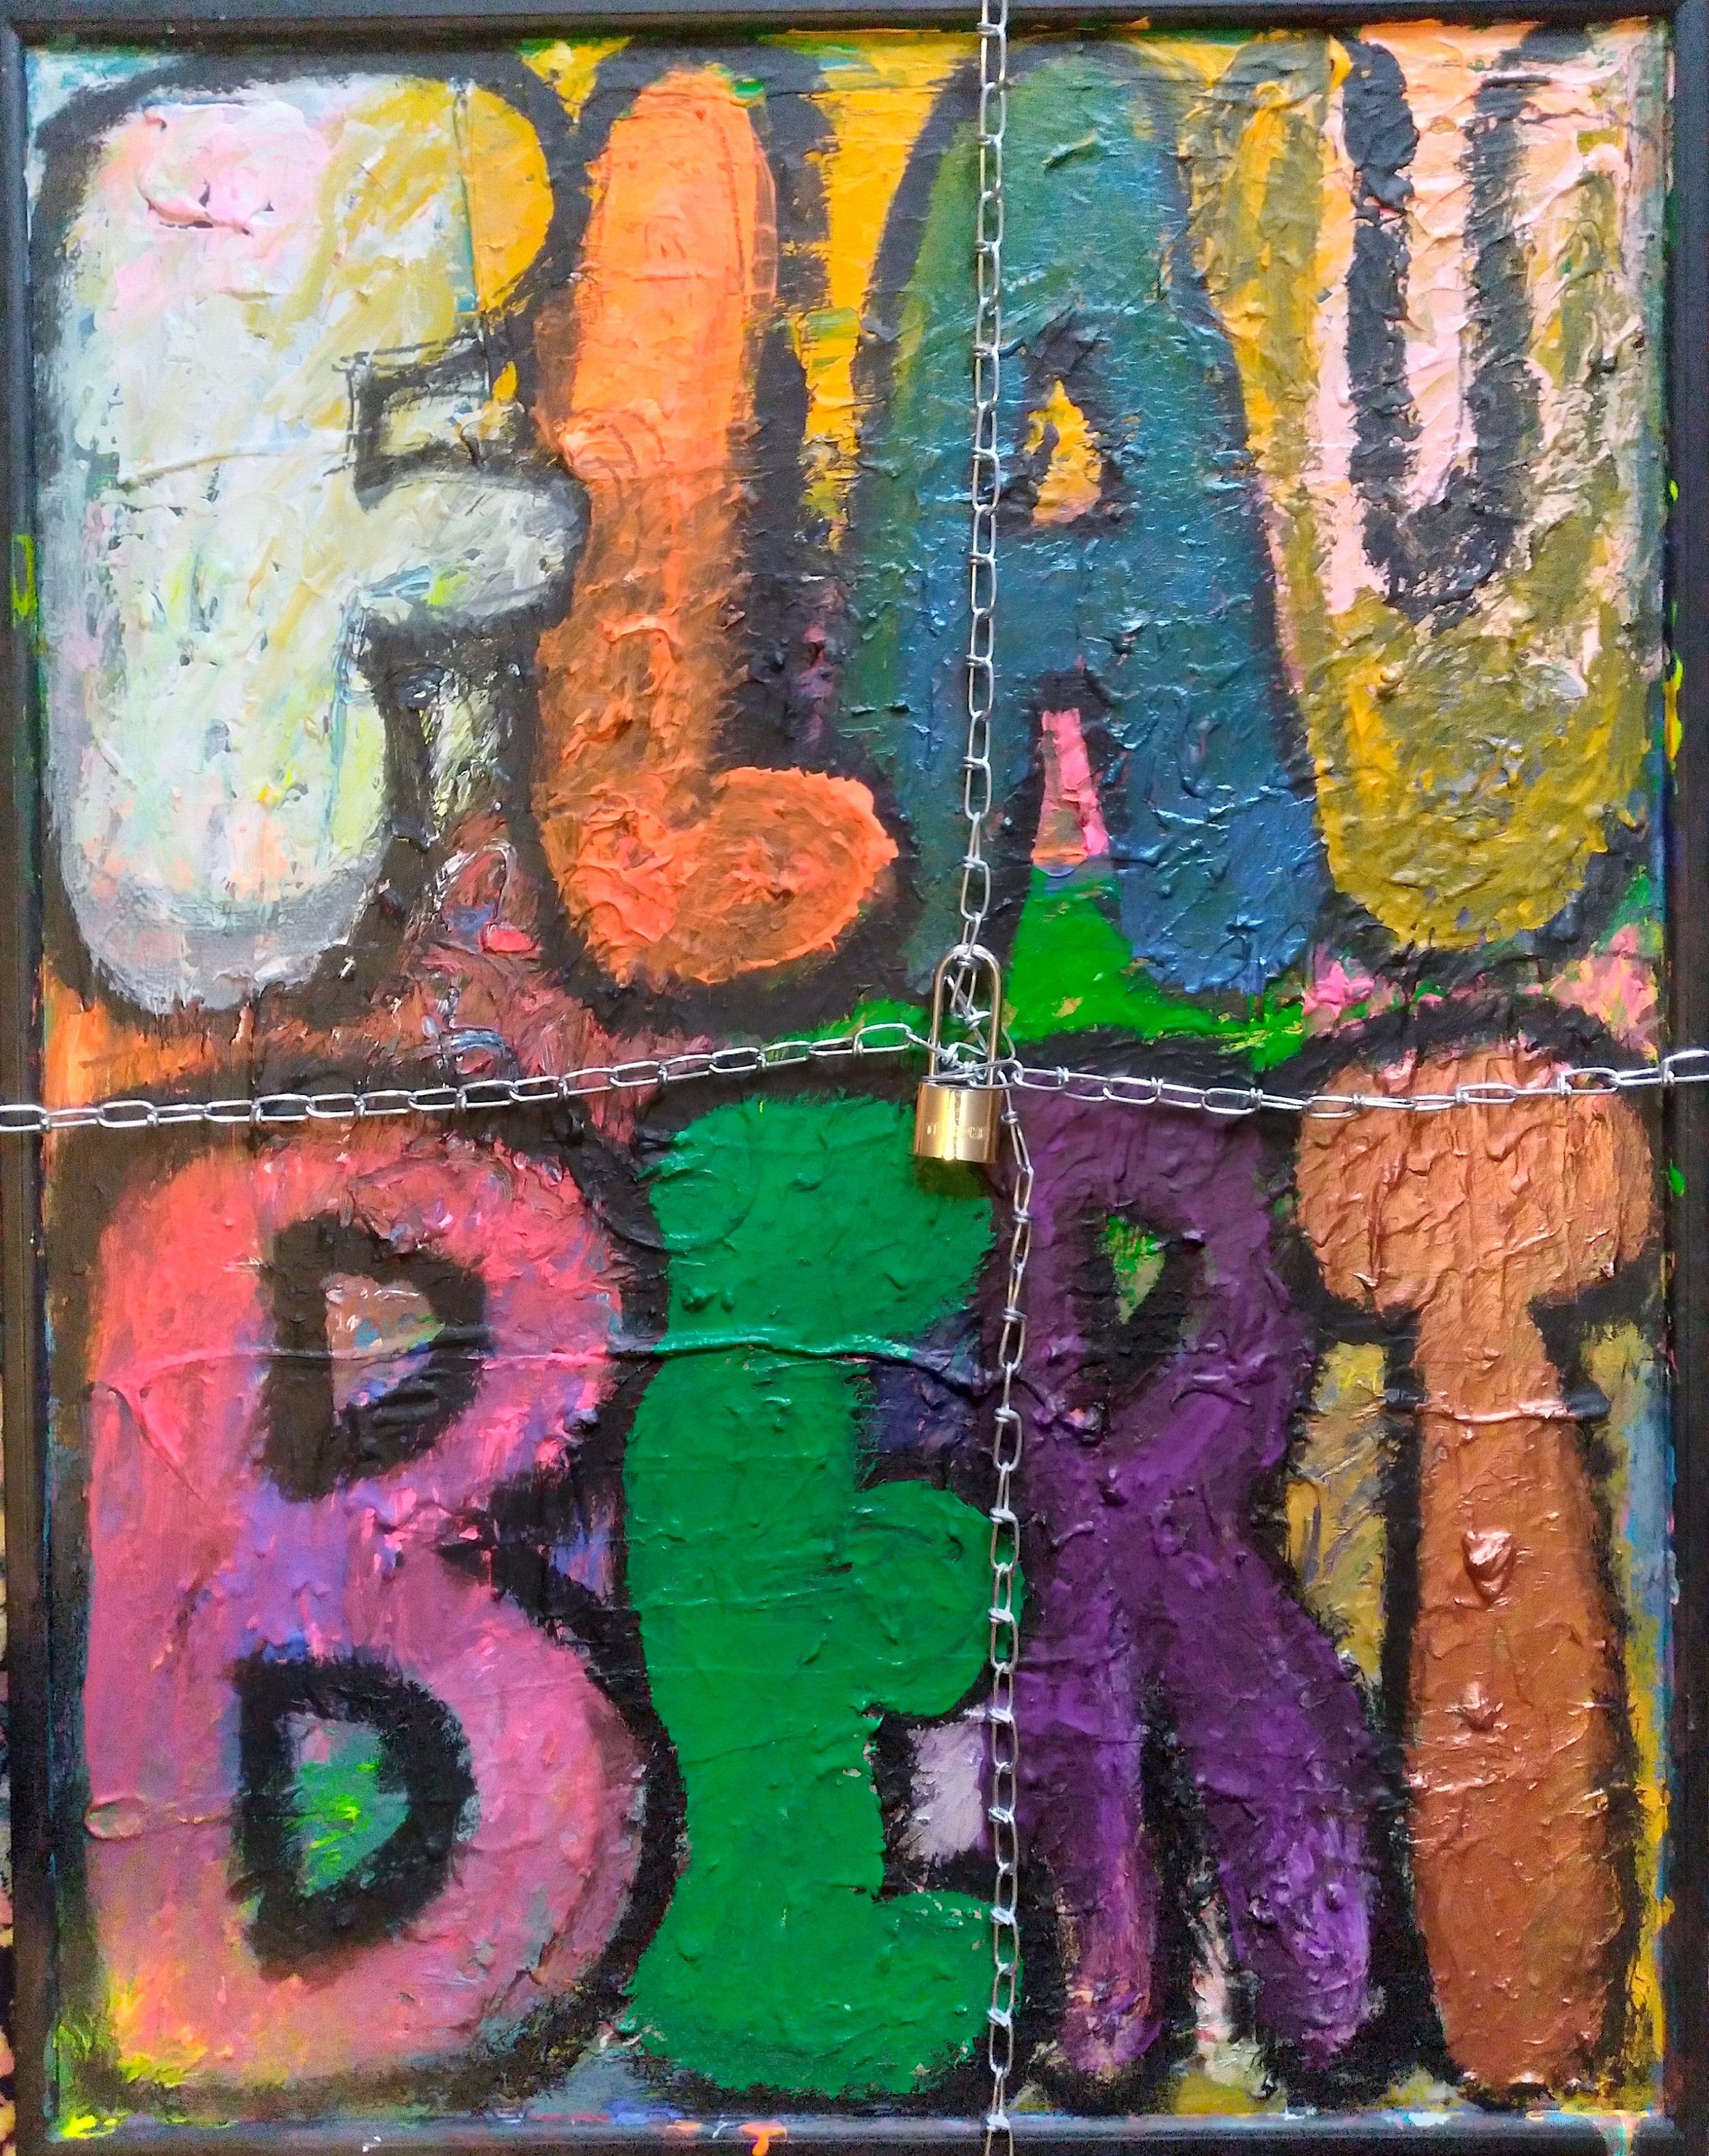 Flaubert, 2019. Oil, acrylic, chain, lock on canvas. 38” x 28".